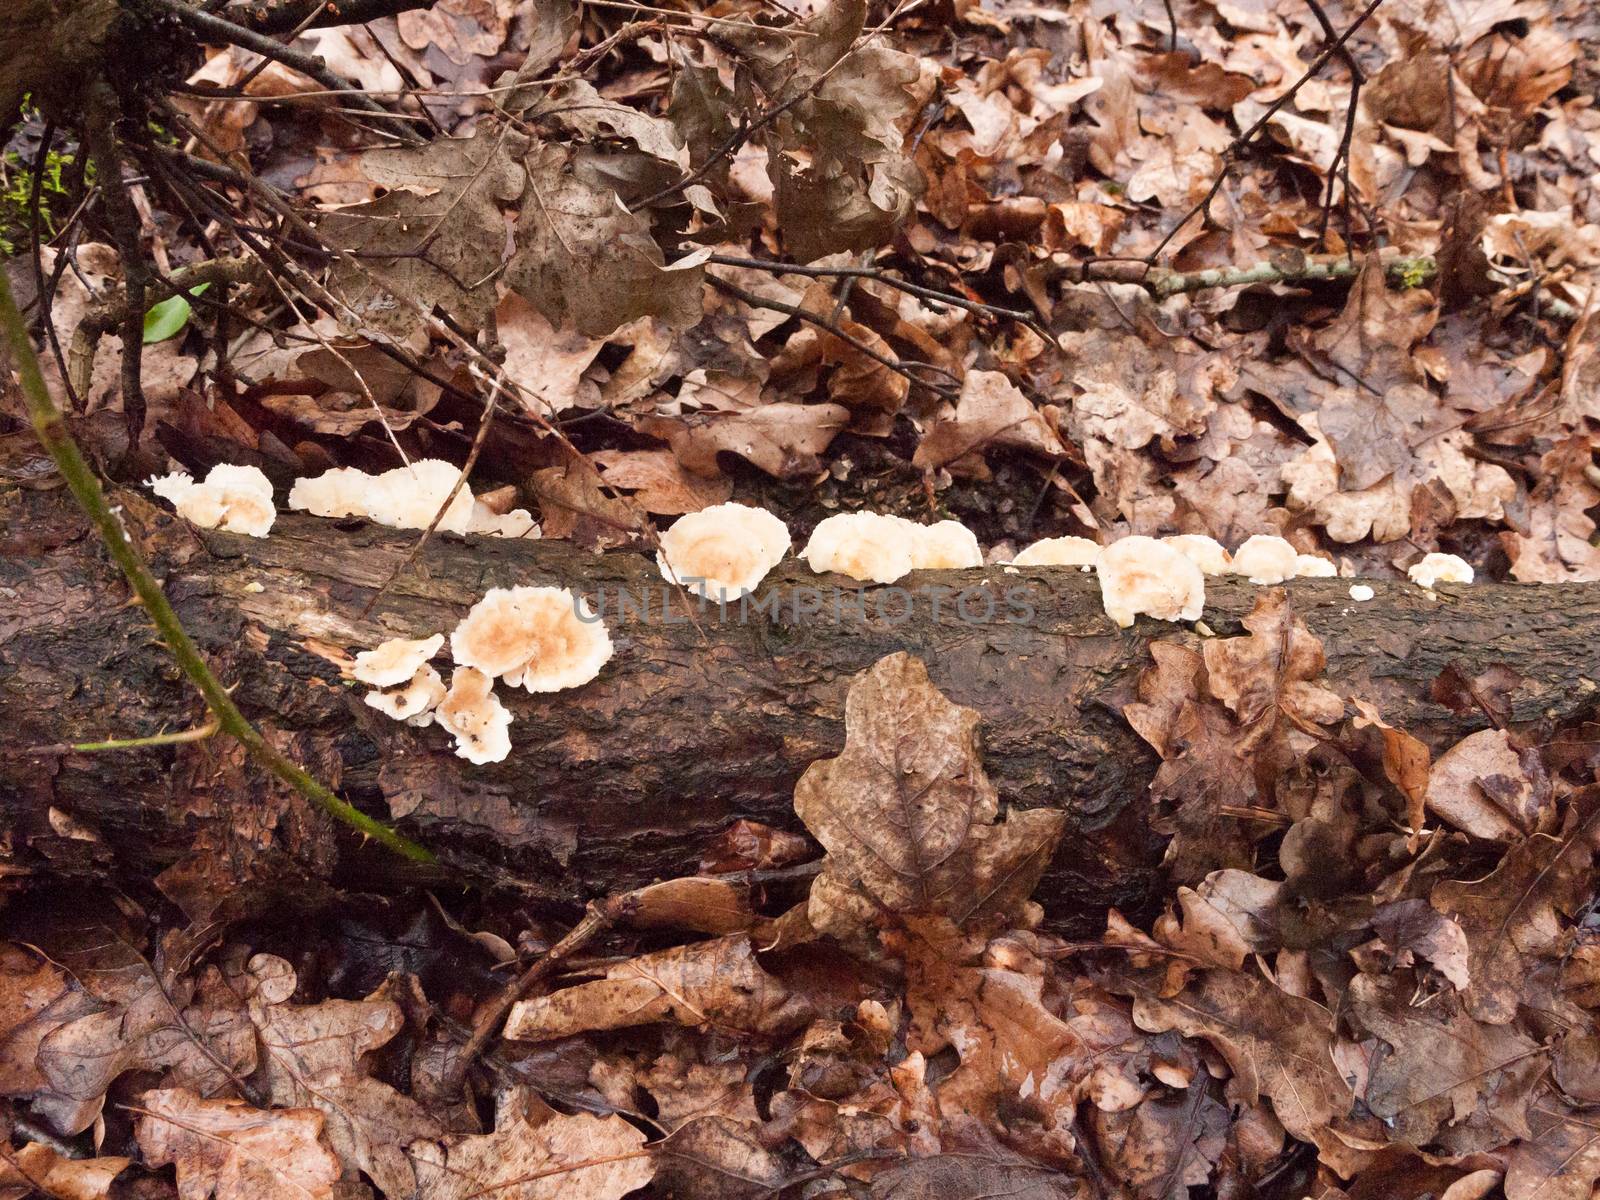 white bracket moss lichen fungus fungi growing on wood bark stum by callumrc